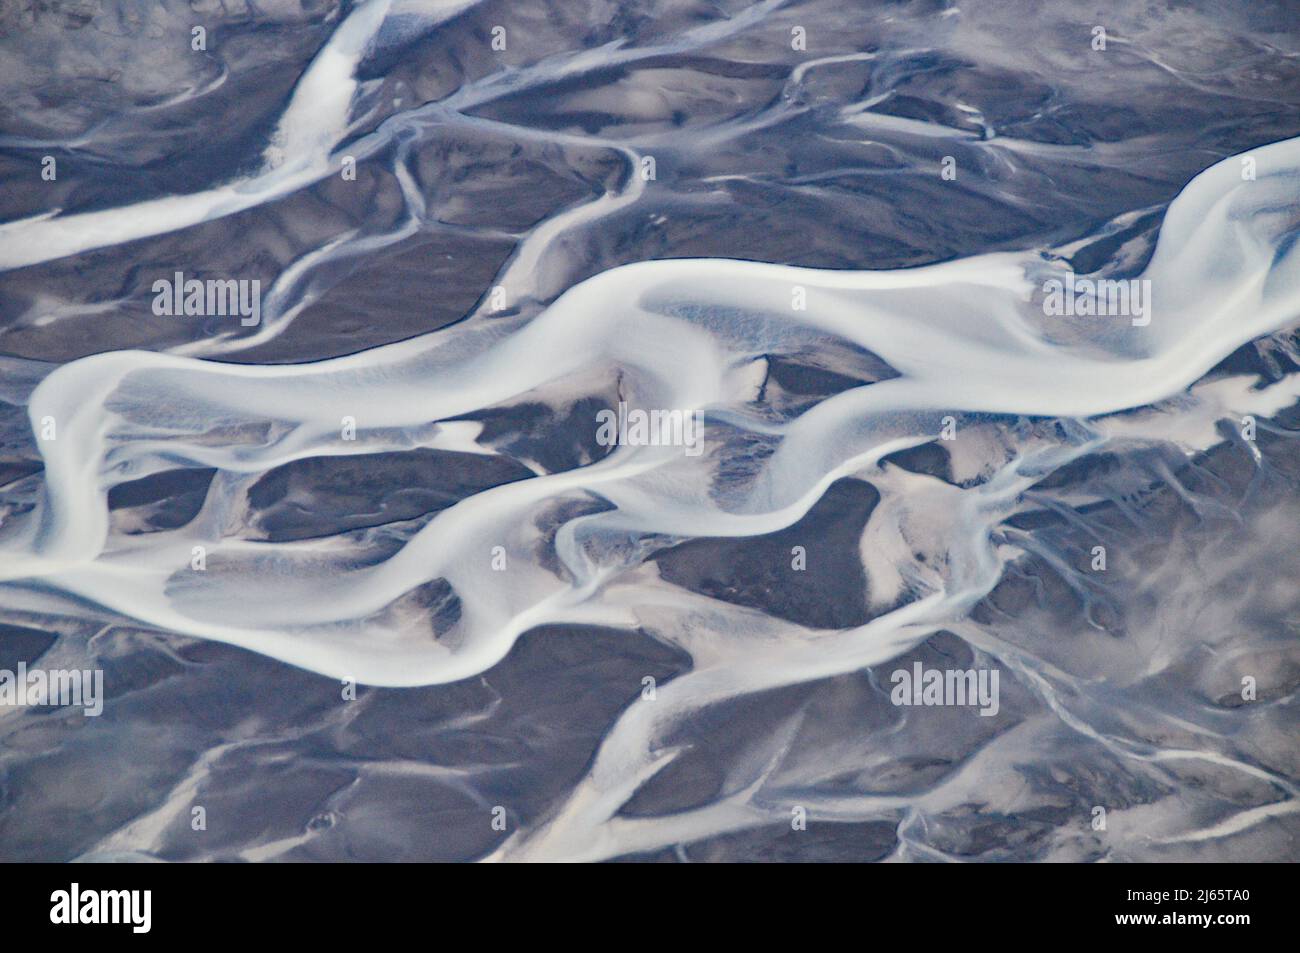 Mäandrierender Fletscherfluss - Luftaufnahme (Rundflug über das Südliche Hochland, Isola) - fotografia aerea di un fiume ghiacciaio in Islanda Foto Stock